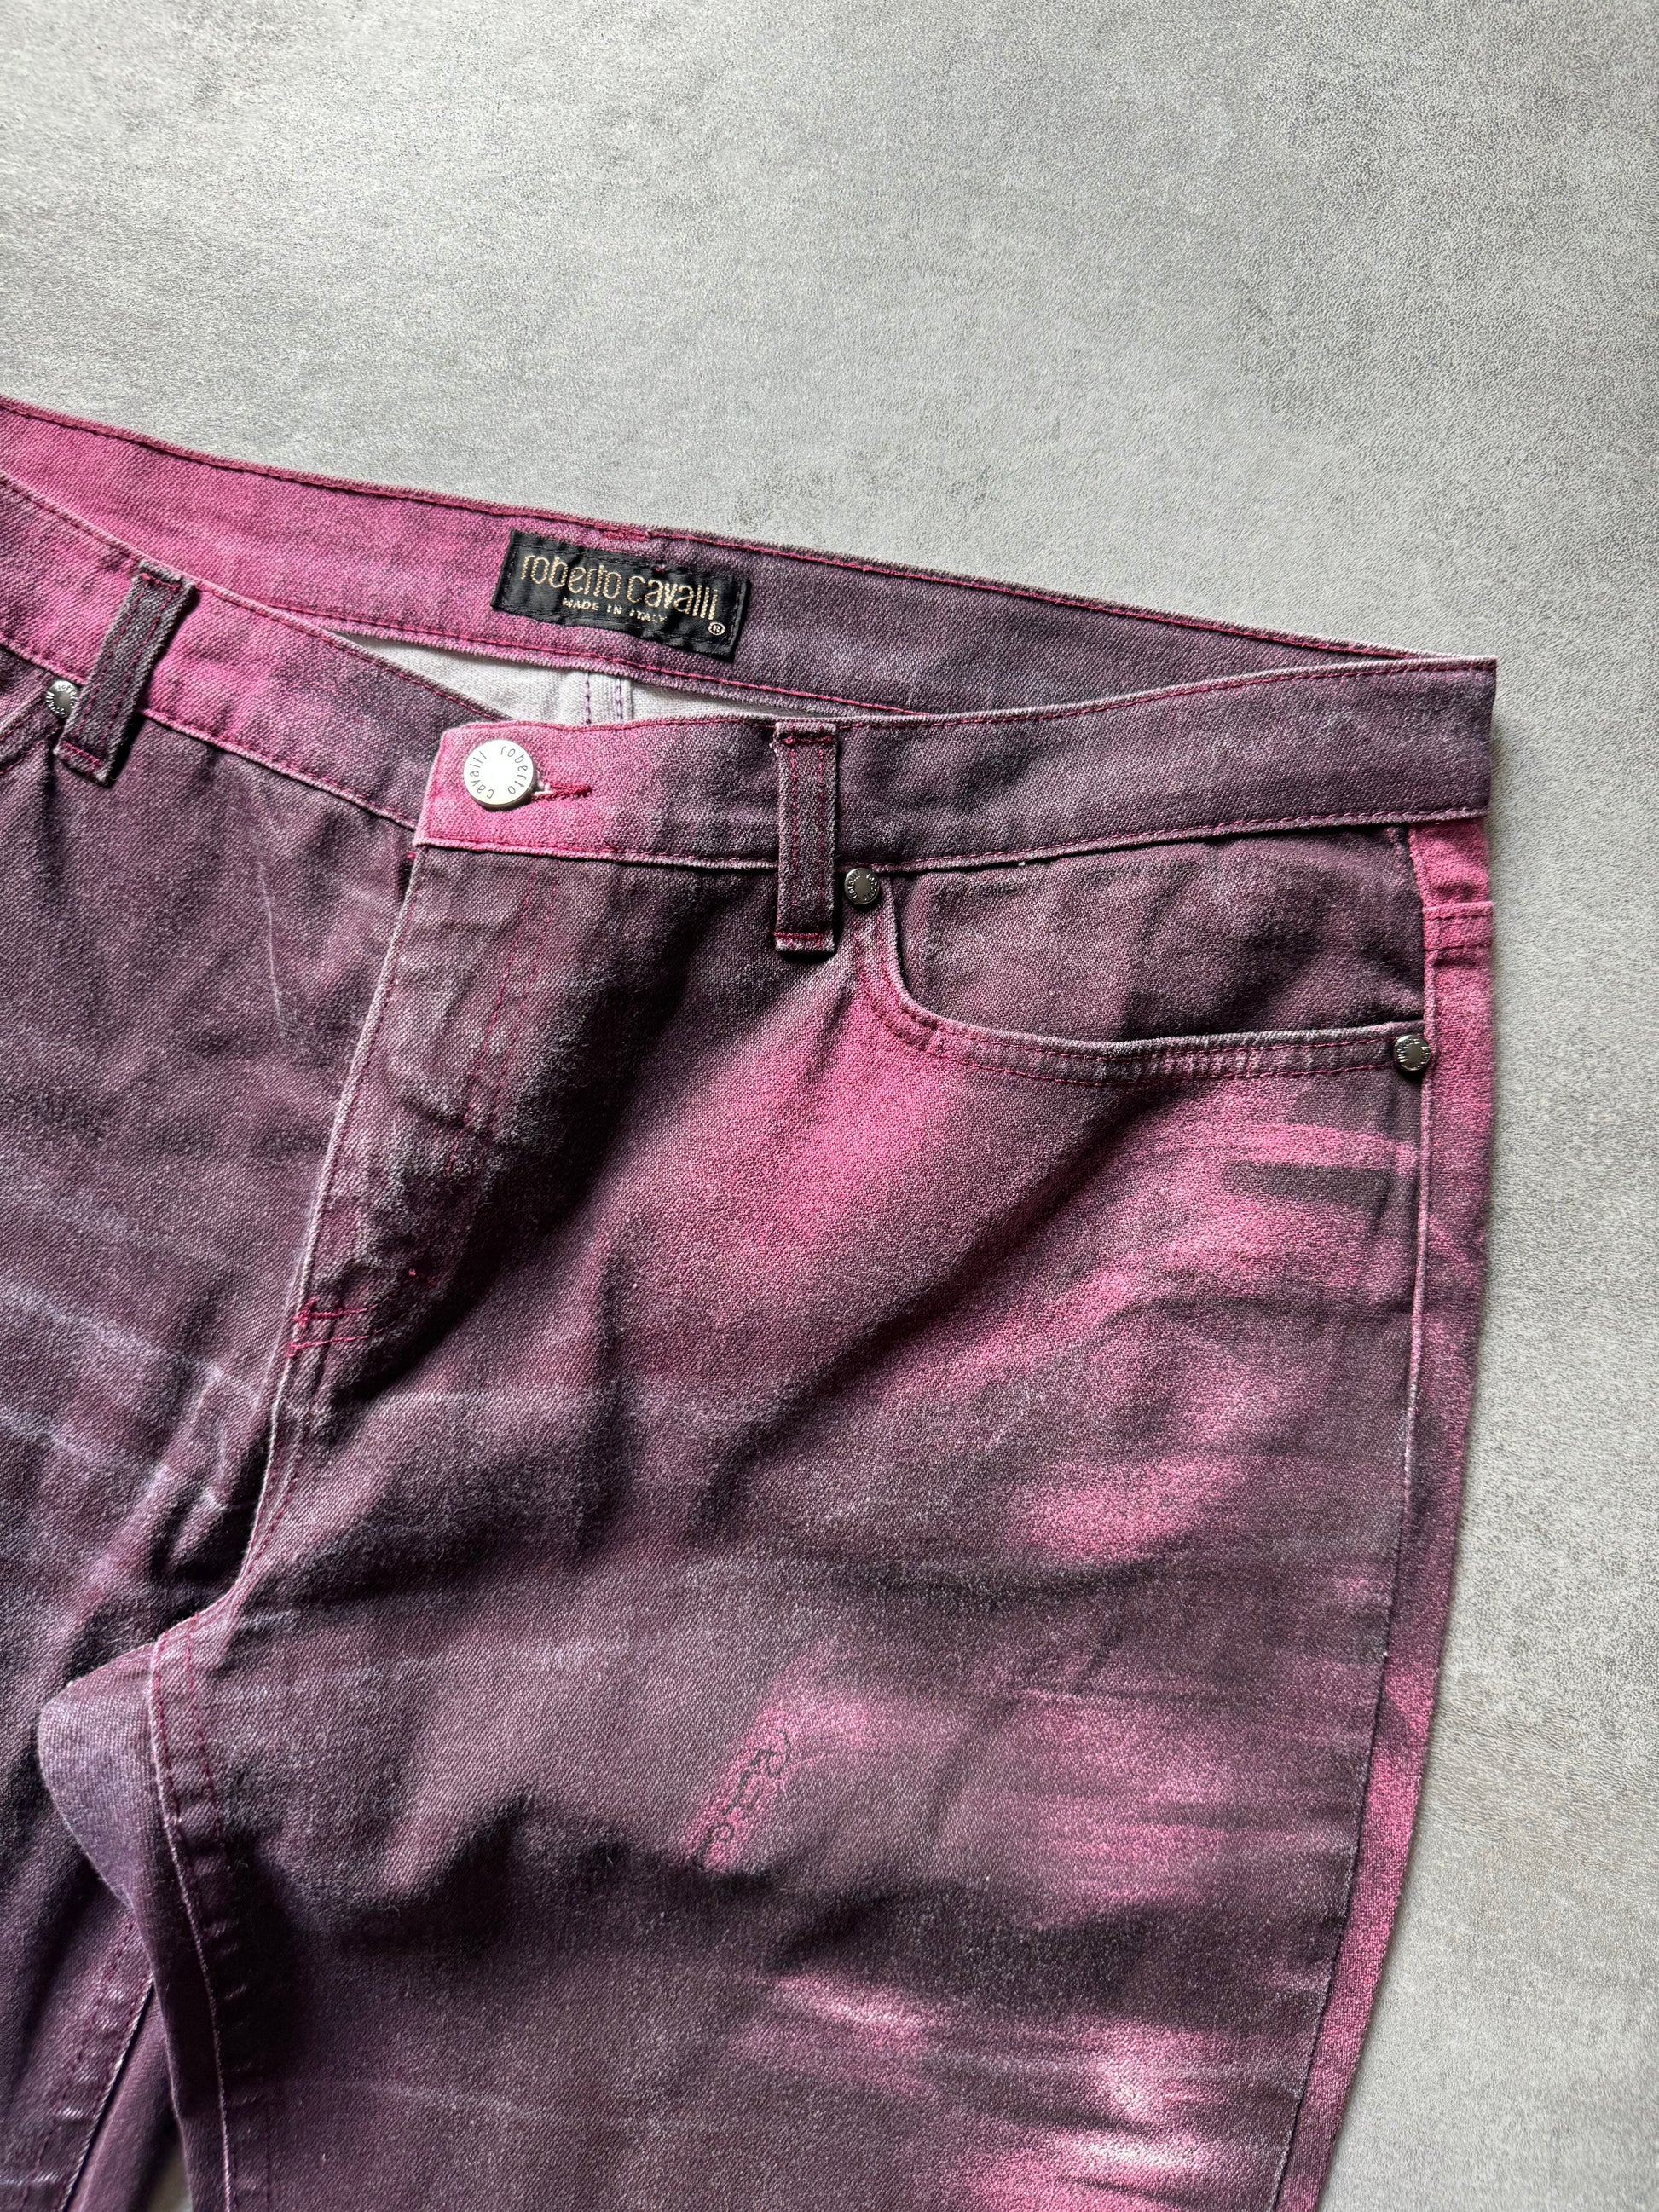 AW2000 Roberto Cavalli Floral Purple Spectrum Pants (L) - 6